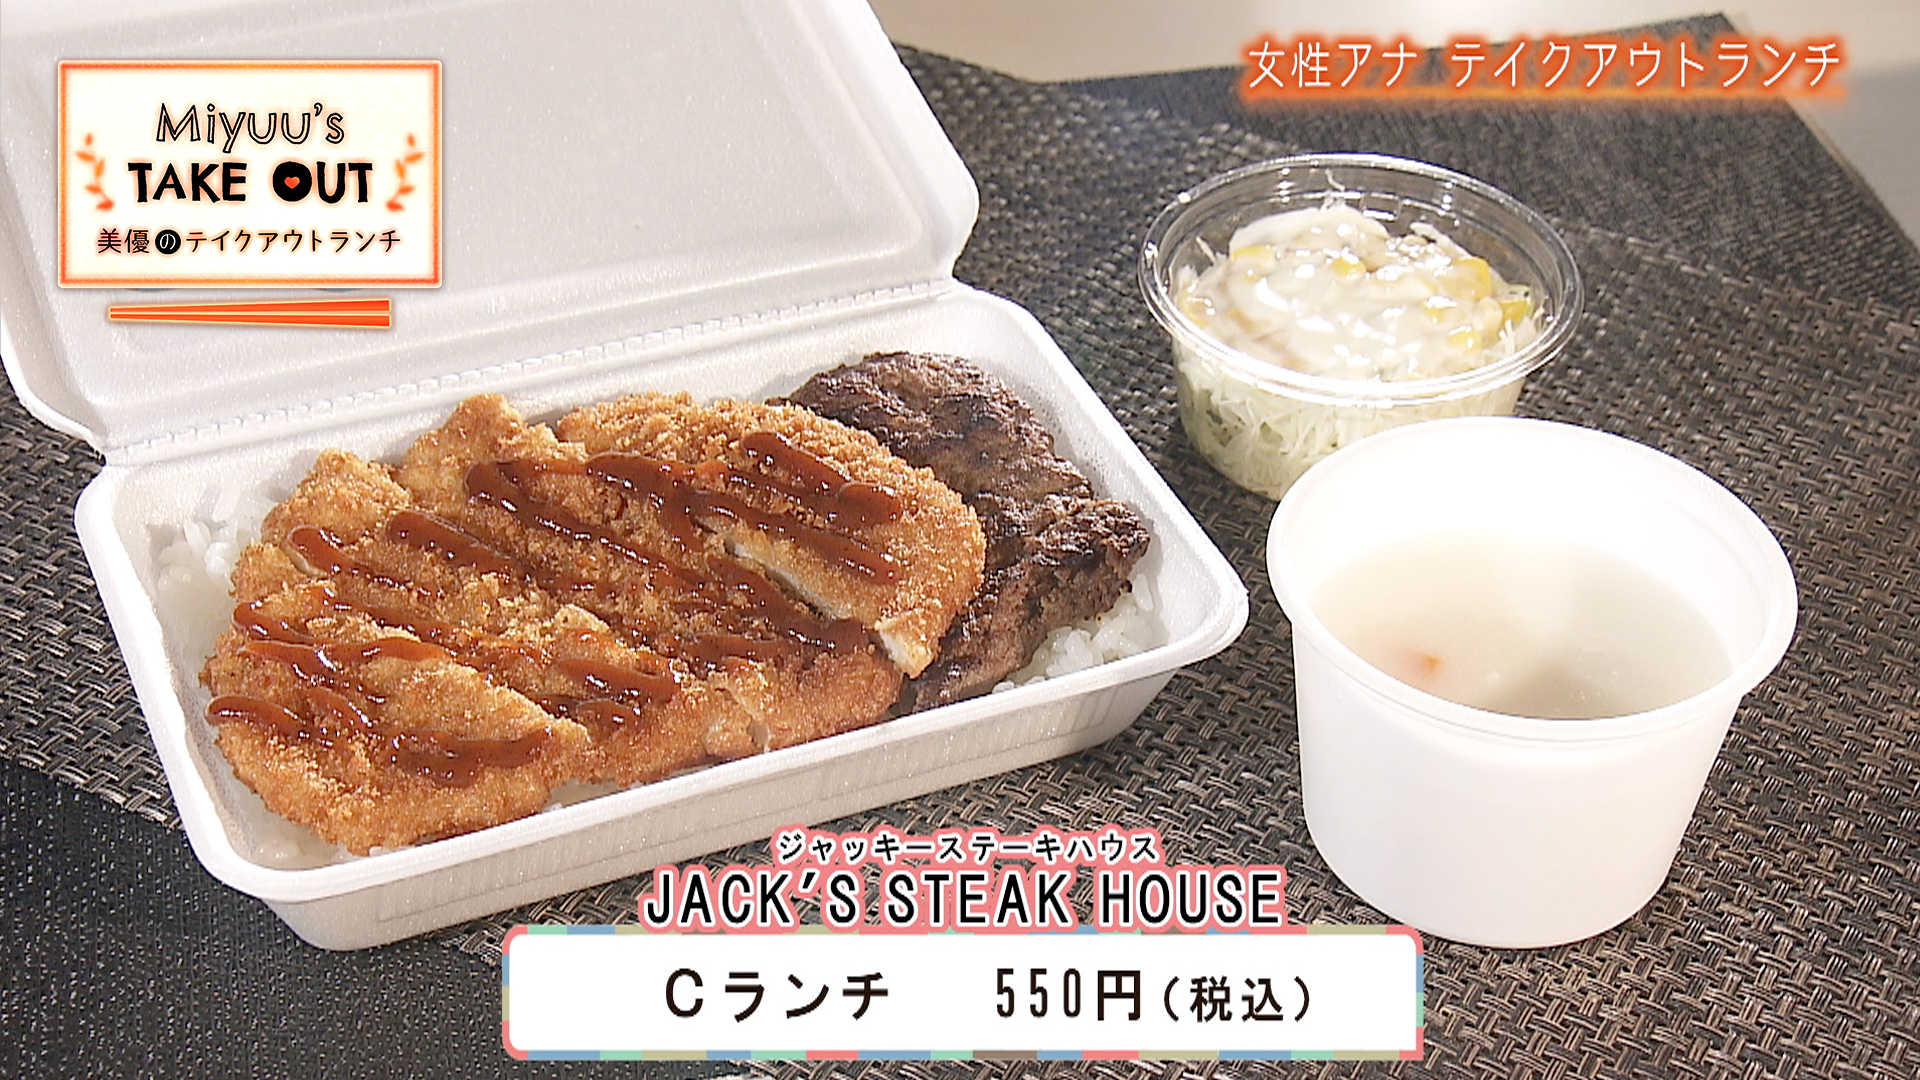 #24 JACK'S STEAK HOUSE ジャッキーステーキハウス